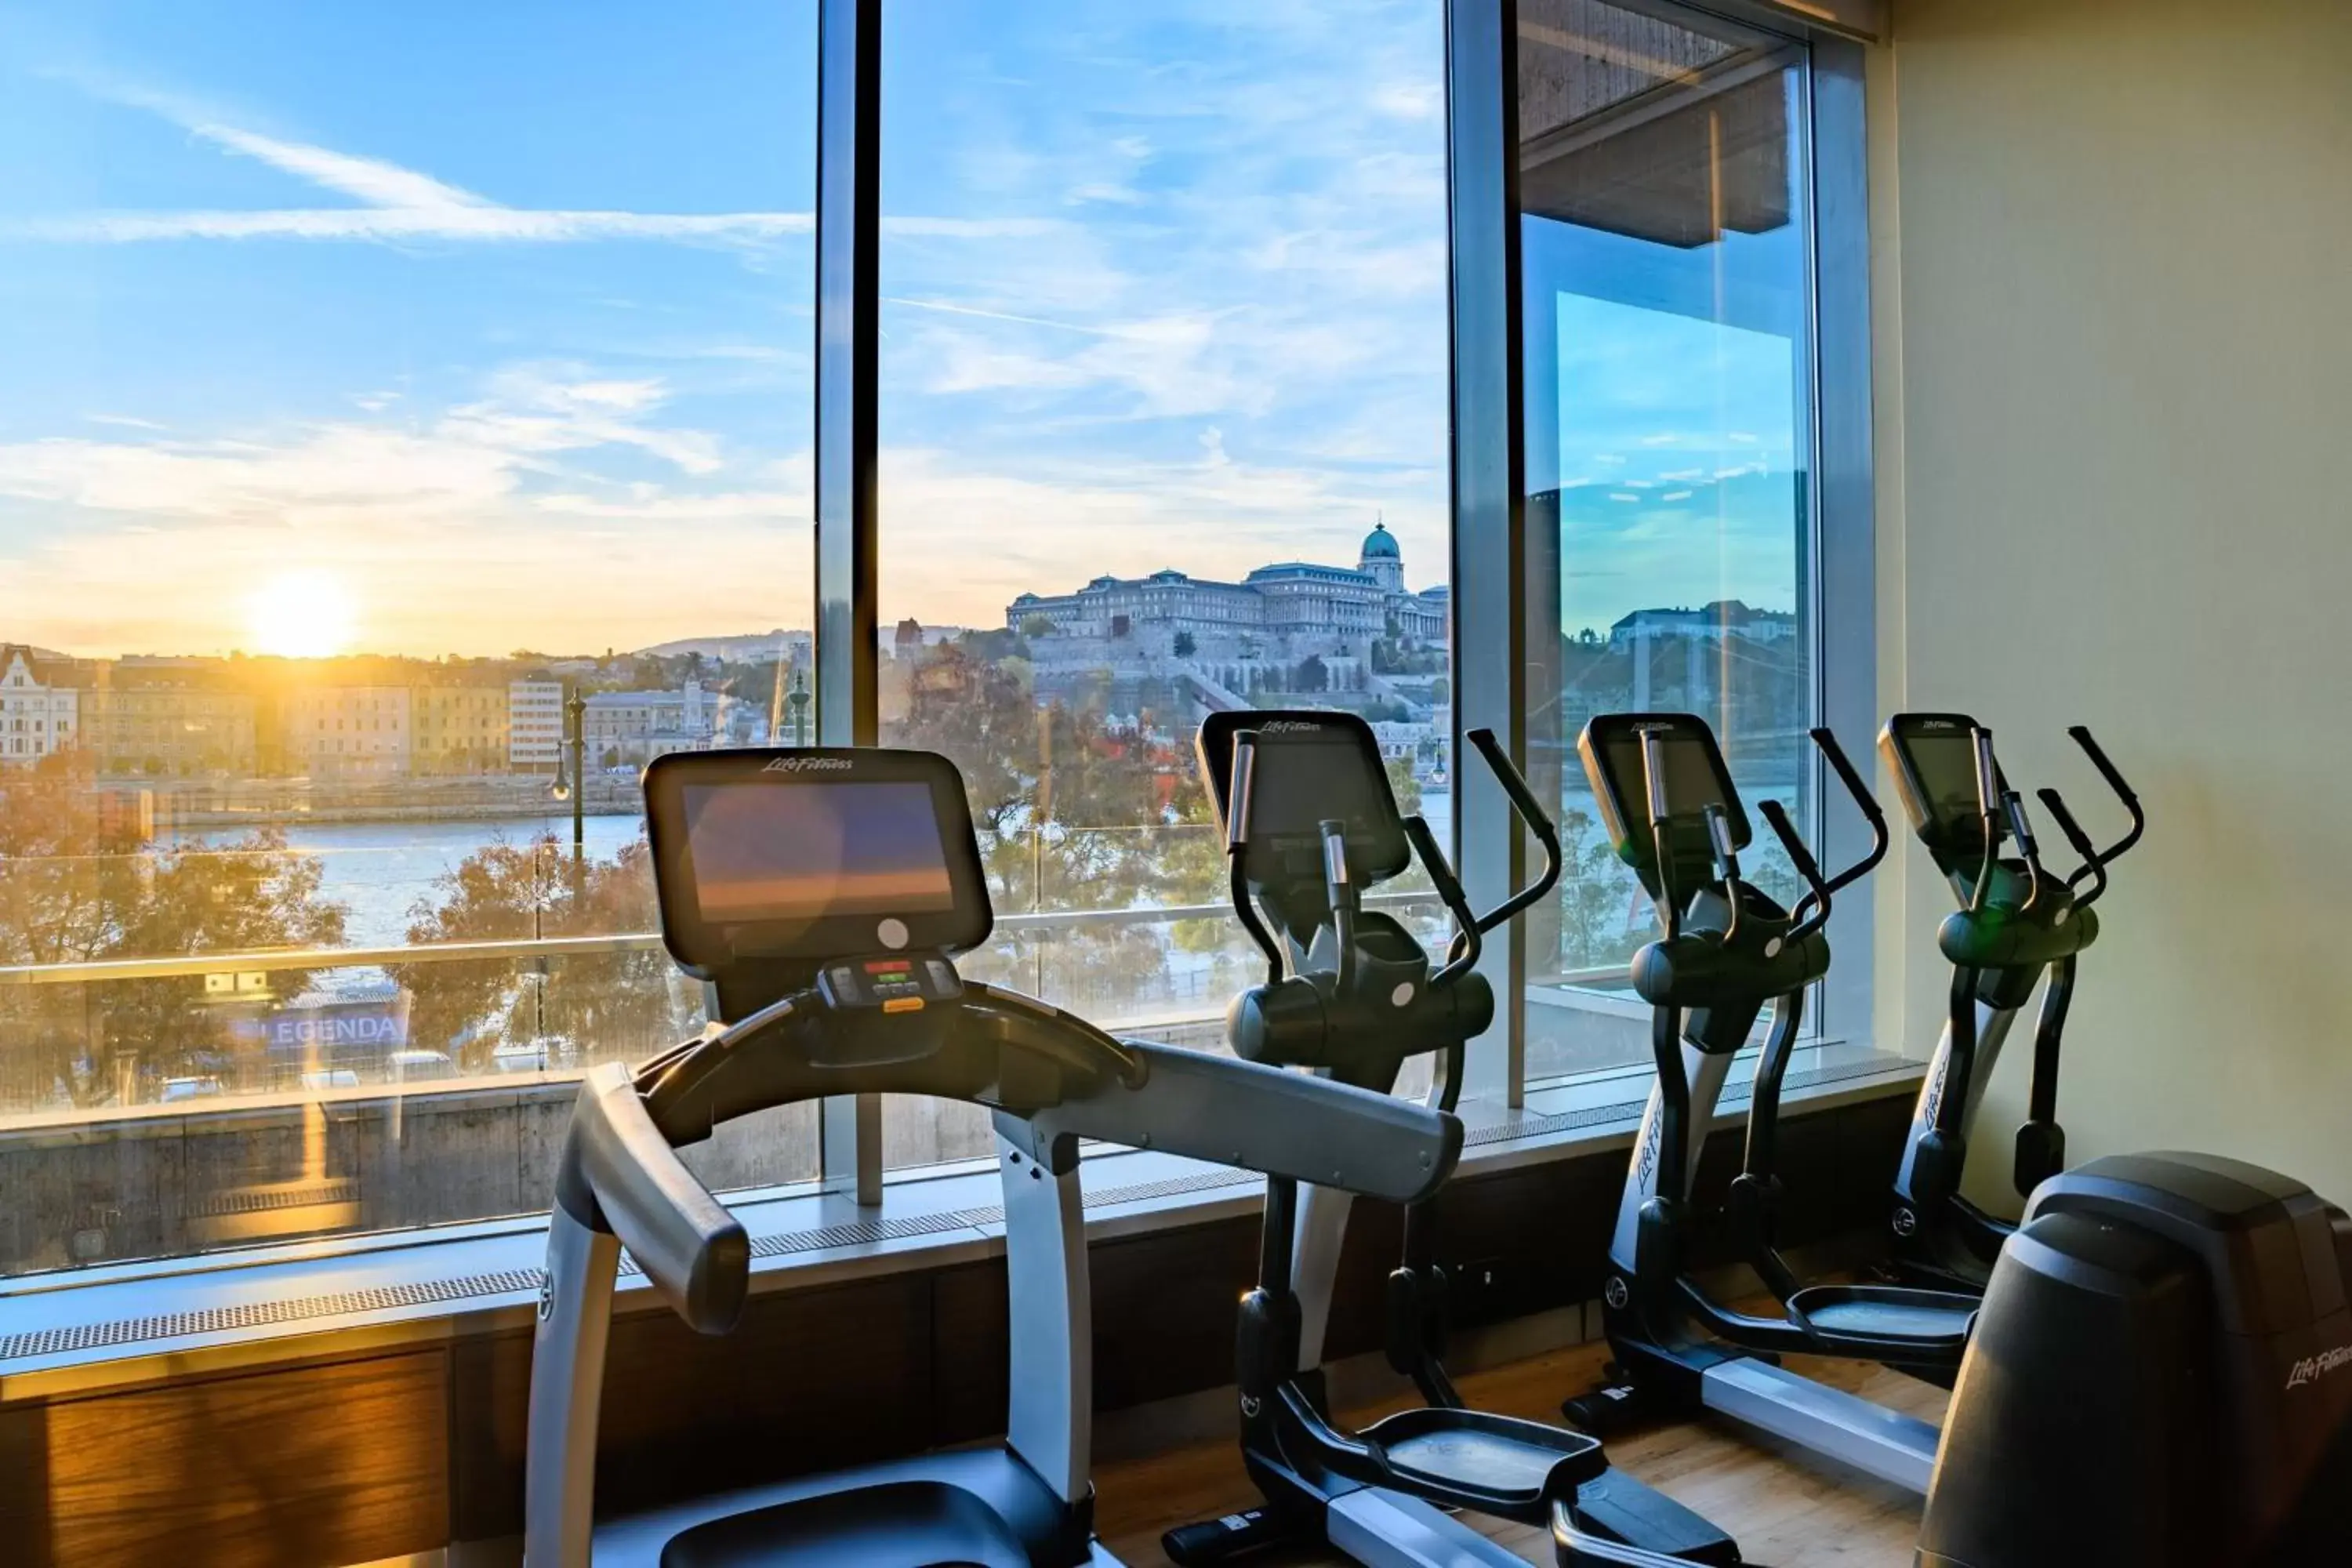 Fitness centre/facilities, Fitness Center/Facilities in Budapest Marriott Hotel